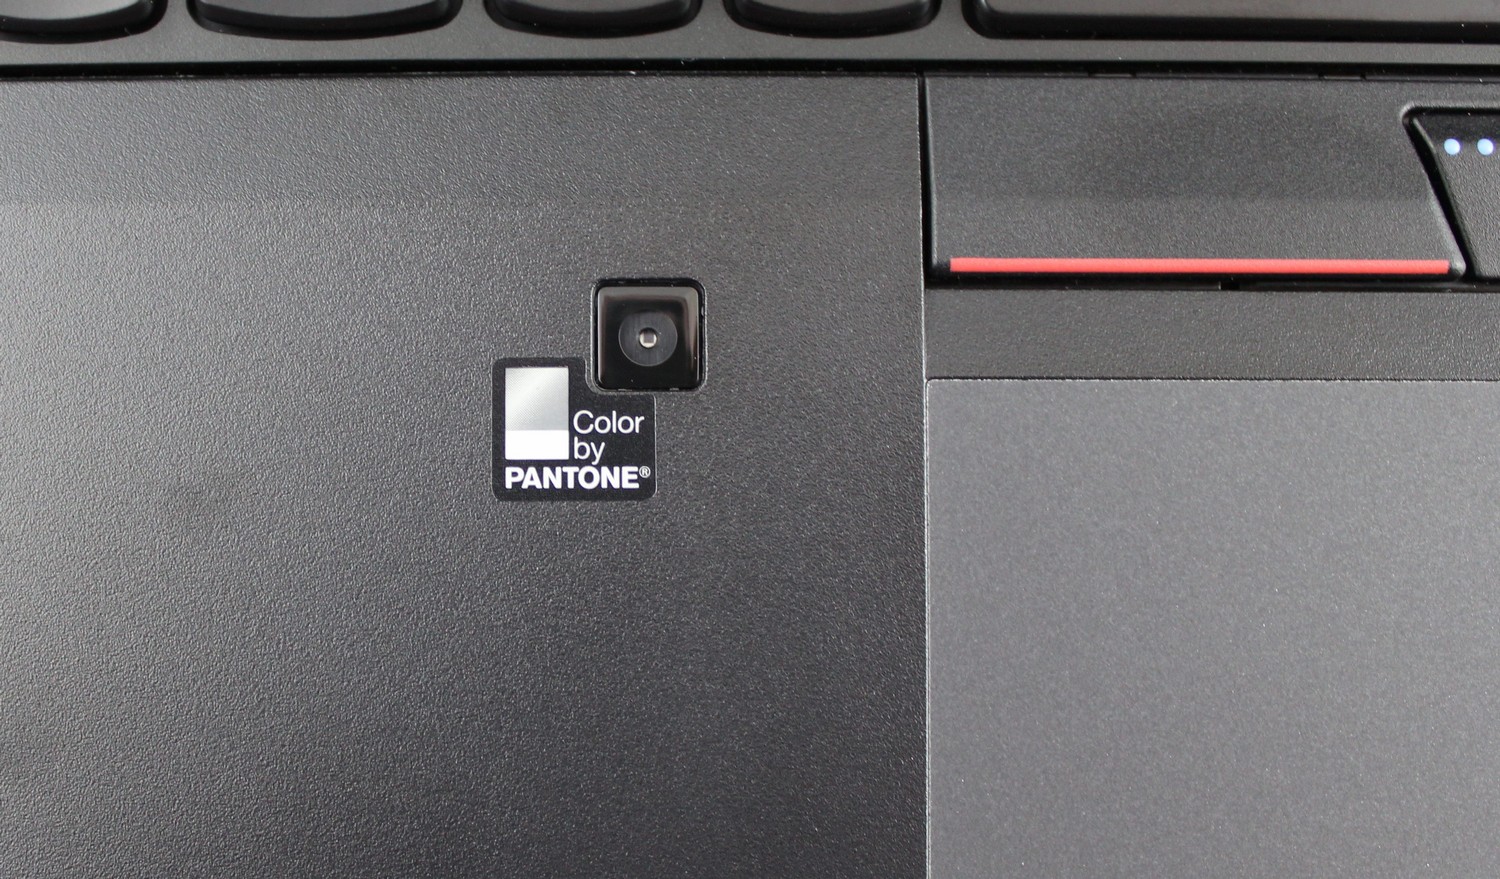 Display - The Lenovo ThinkPad P70 Review: Mobile Xeon Workstation